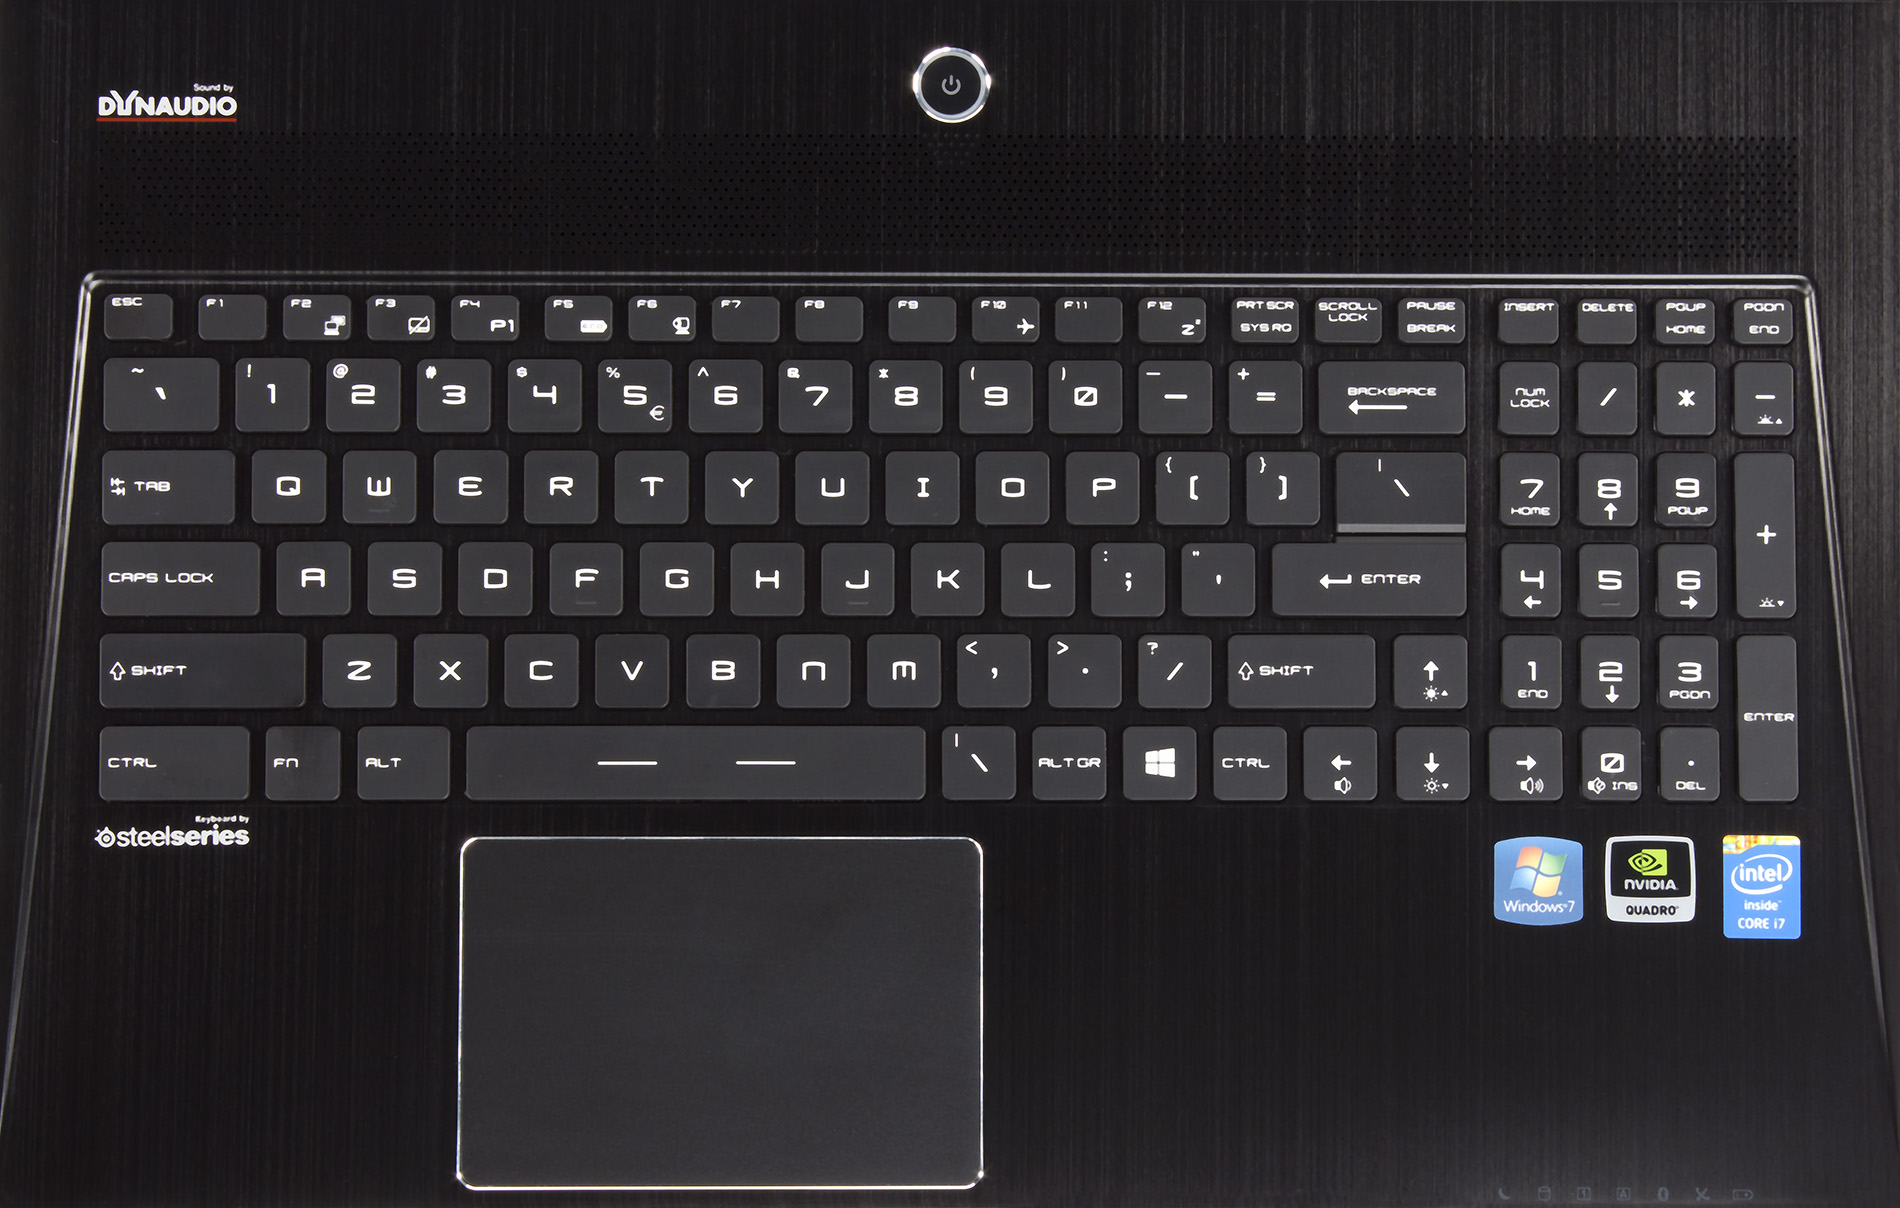 Ноутбук MSI wt60-2oj. Горячие клавиши на ноутбуке MSI. Программа для подсветки клавиатуры ноутбука MSI. MSI Dynaudio Steelseries. Как отключить подсветку на клавиатуре ноутбука msi